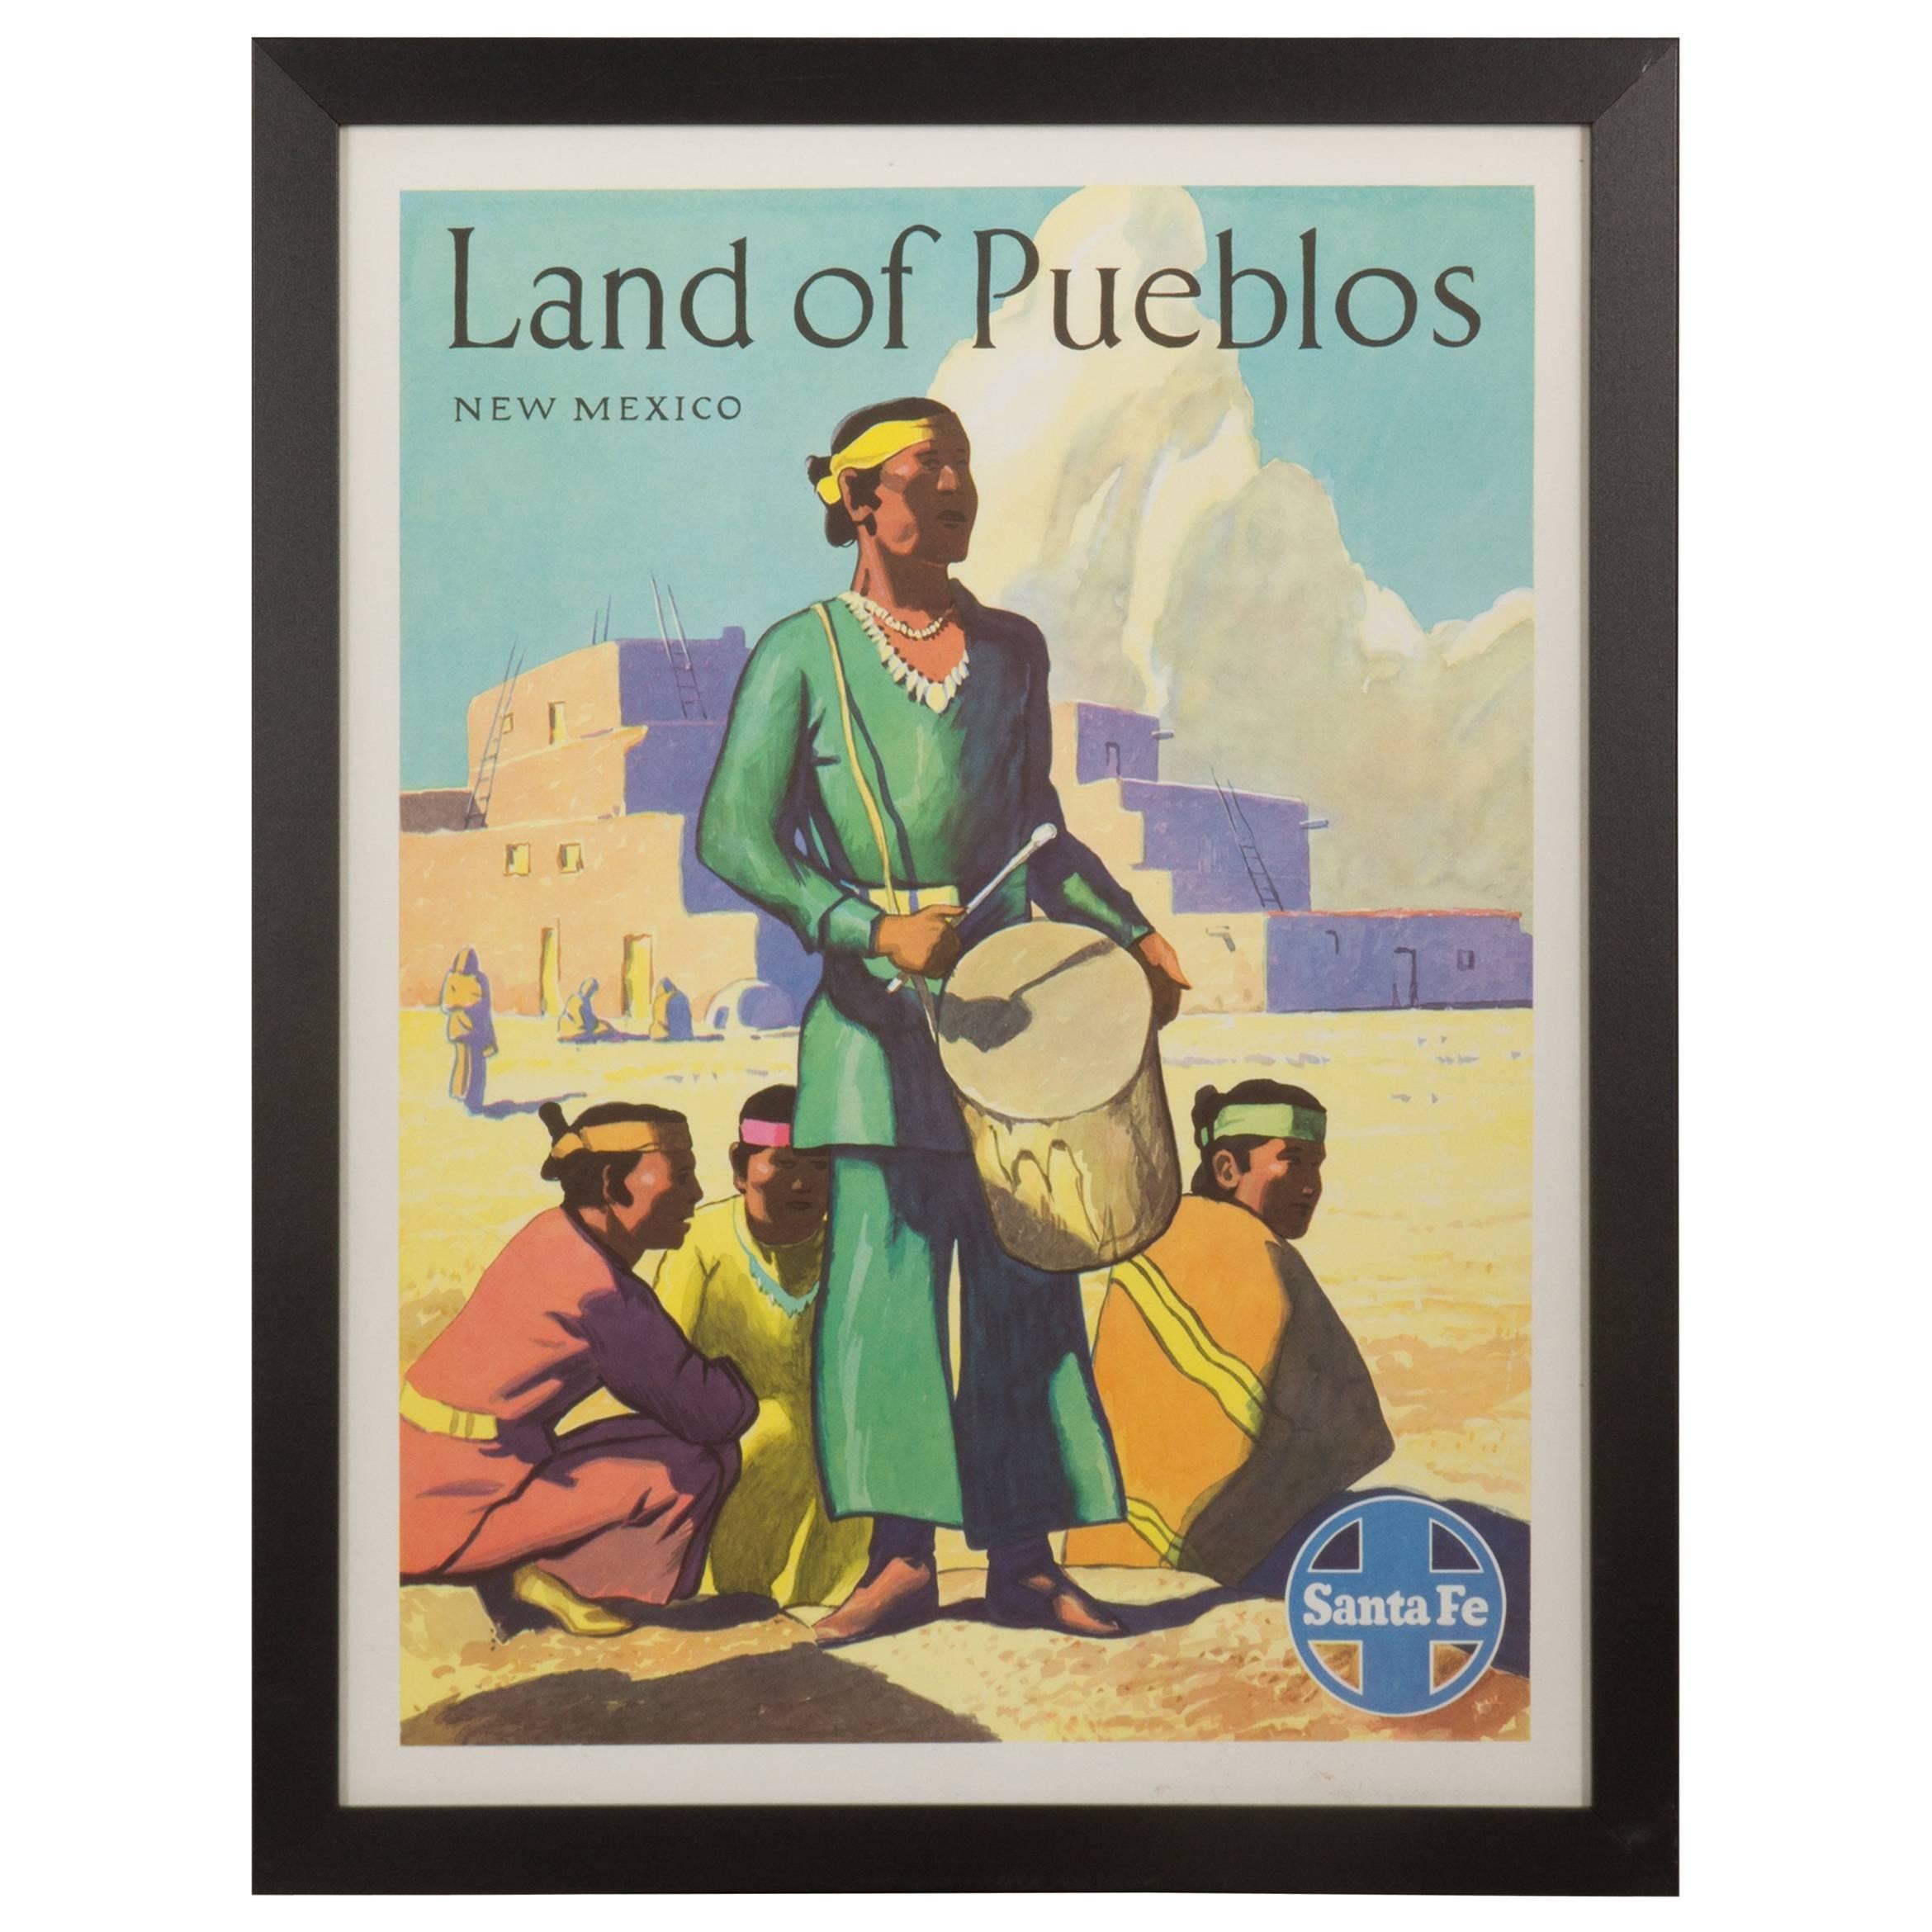 Vintage, Original Sante Fe Travel Poster "Land of the Pueblos" For Sale